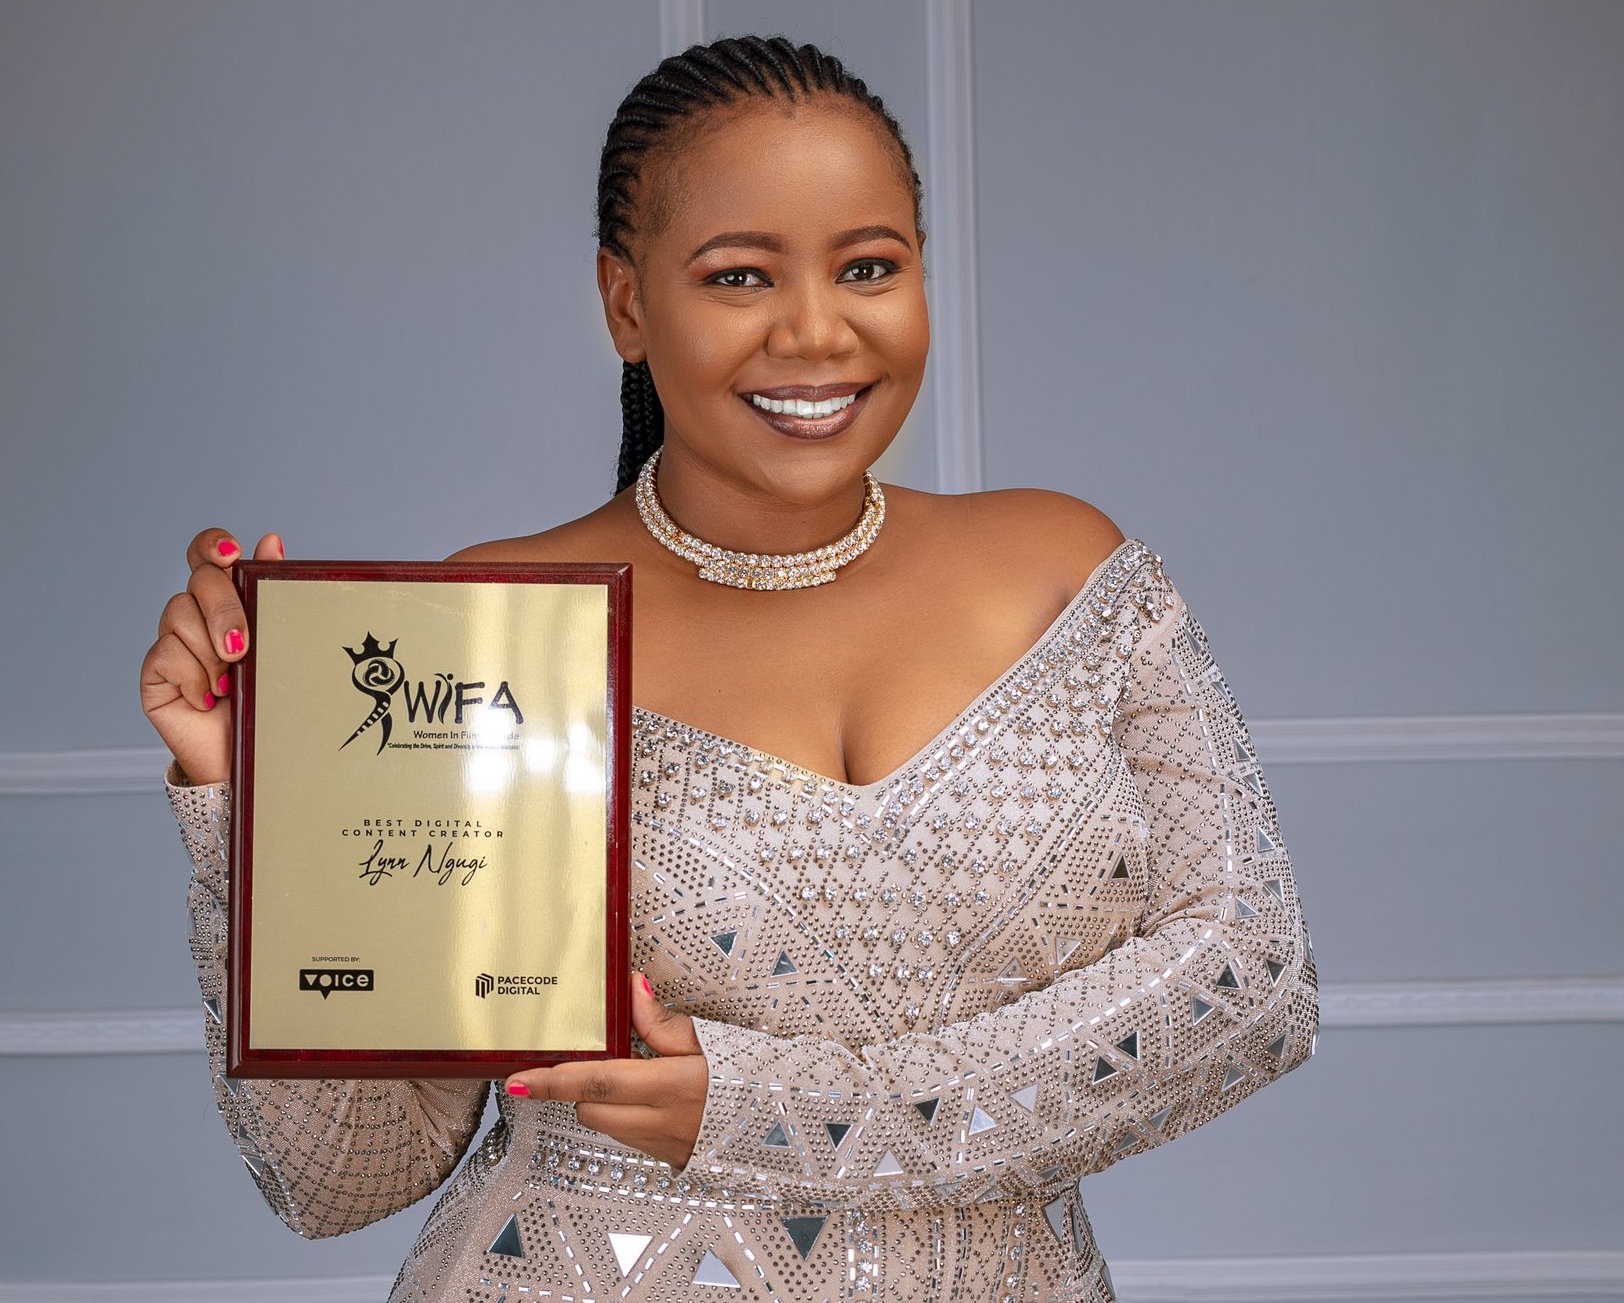 Show host Lynn Ngugi flaunts eminent award won in third edition of WIFA